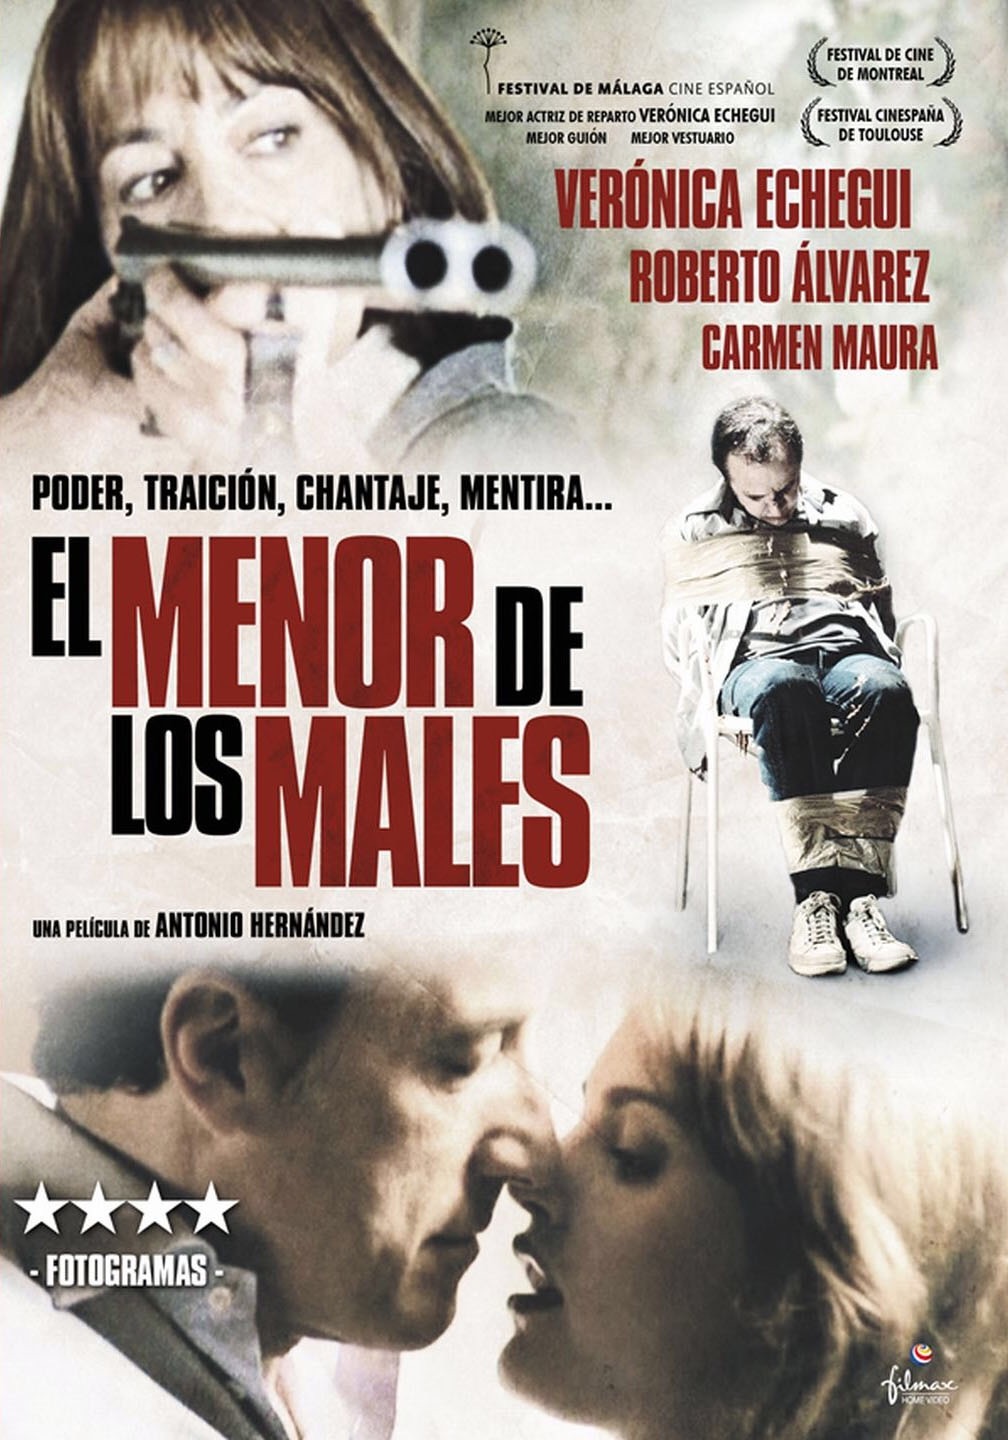 Roberto Álvarez در صحنه فیلم سینمایی El menor de los males به همراه Carmen Maura و Verónica Echegui